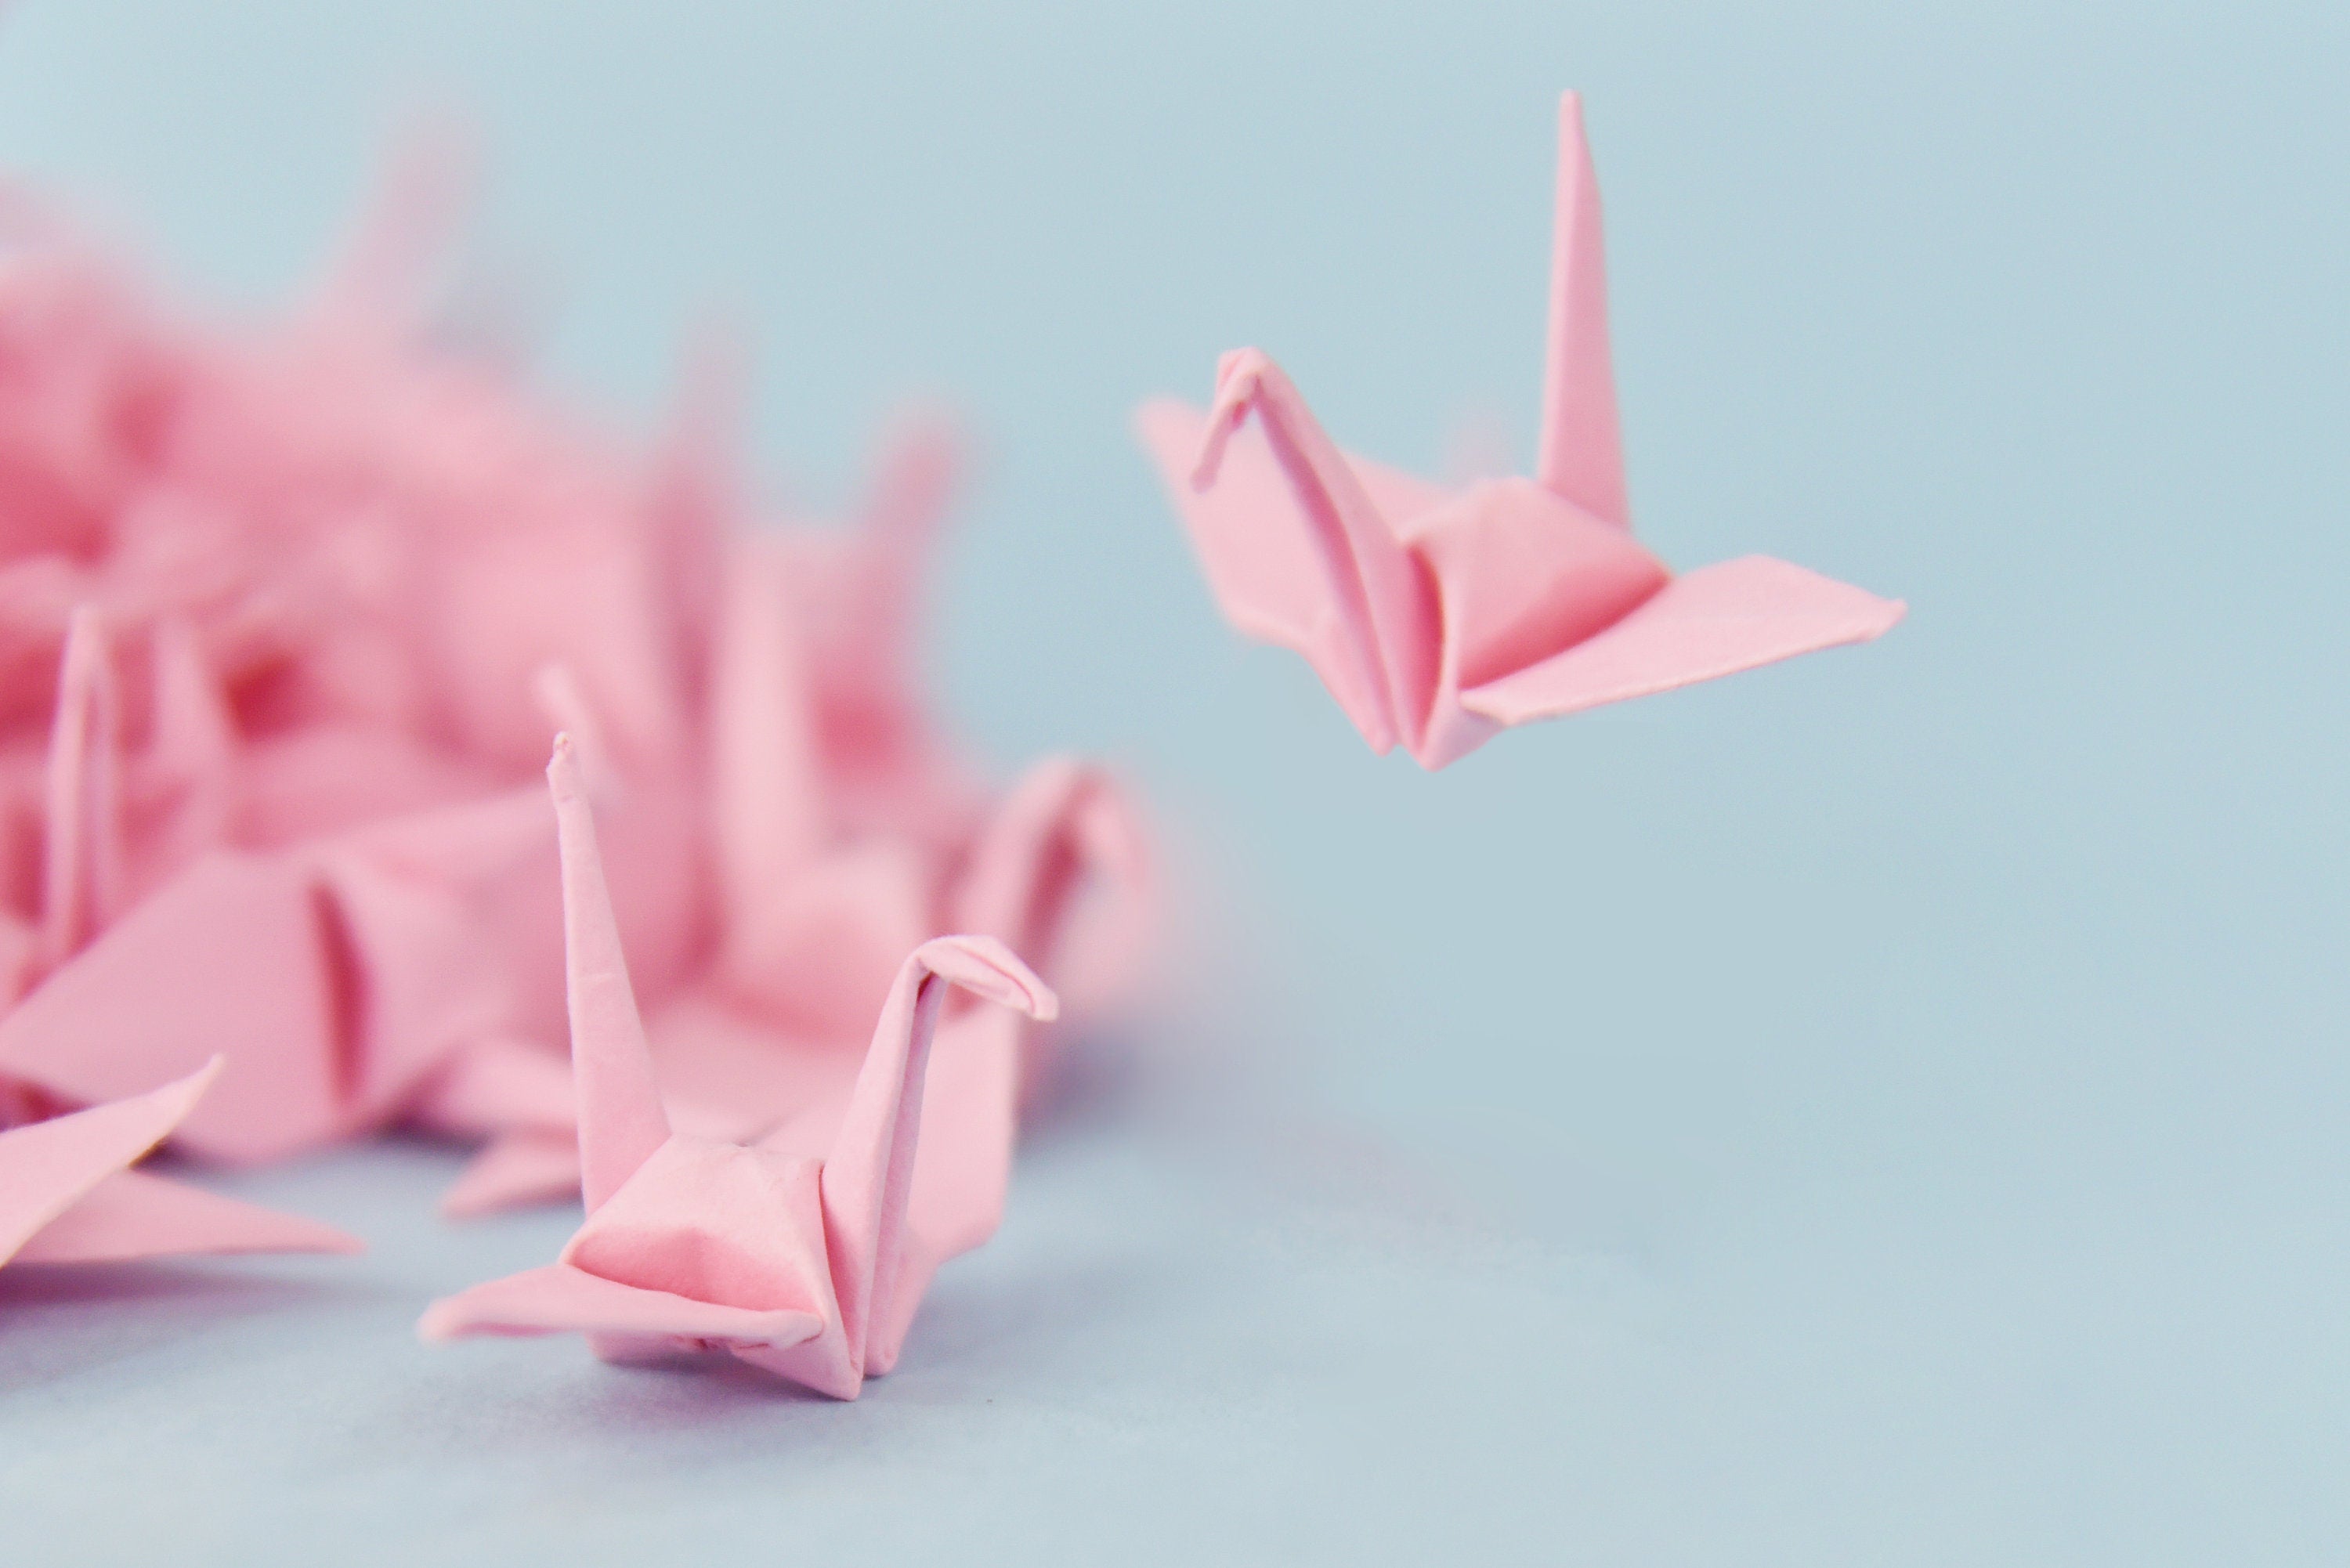 100 gru di carta origami gru origami rosa prefabbricate piccole 1,5x1,5 pollici per decorazioni di nozze, regali di anniversario, San Valentino